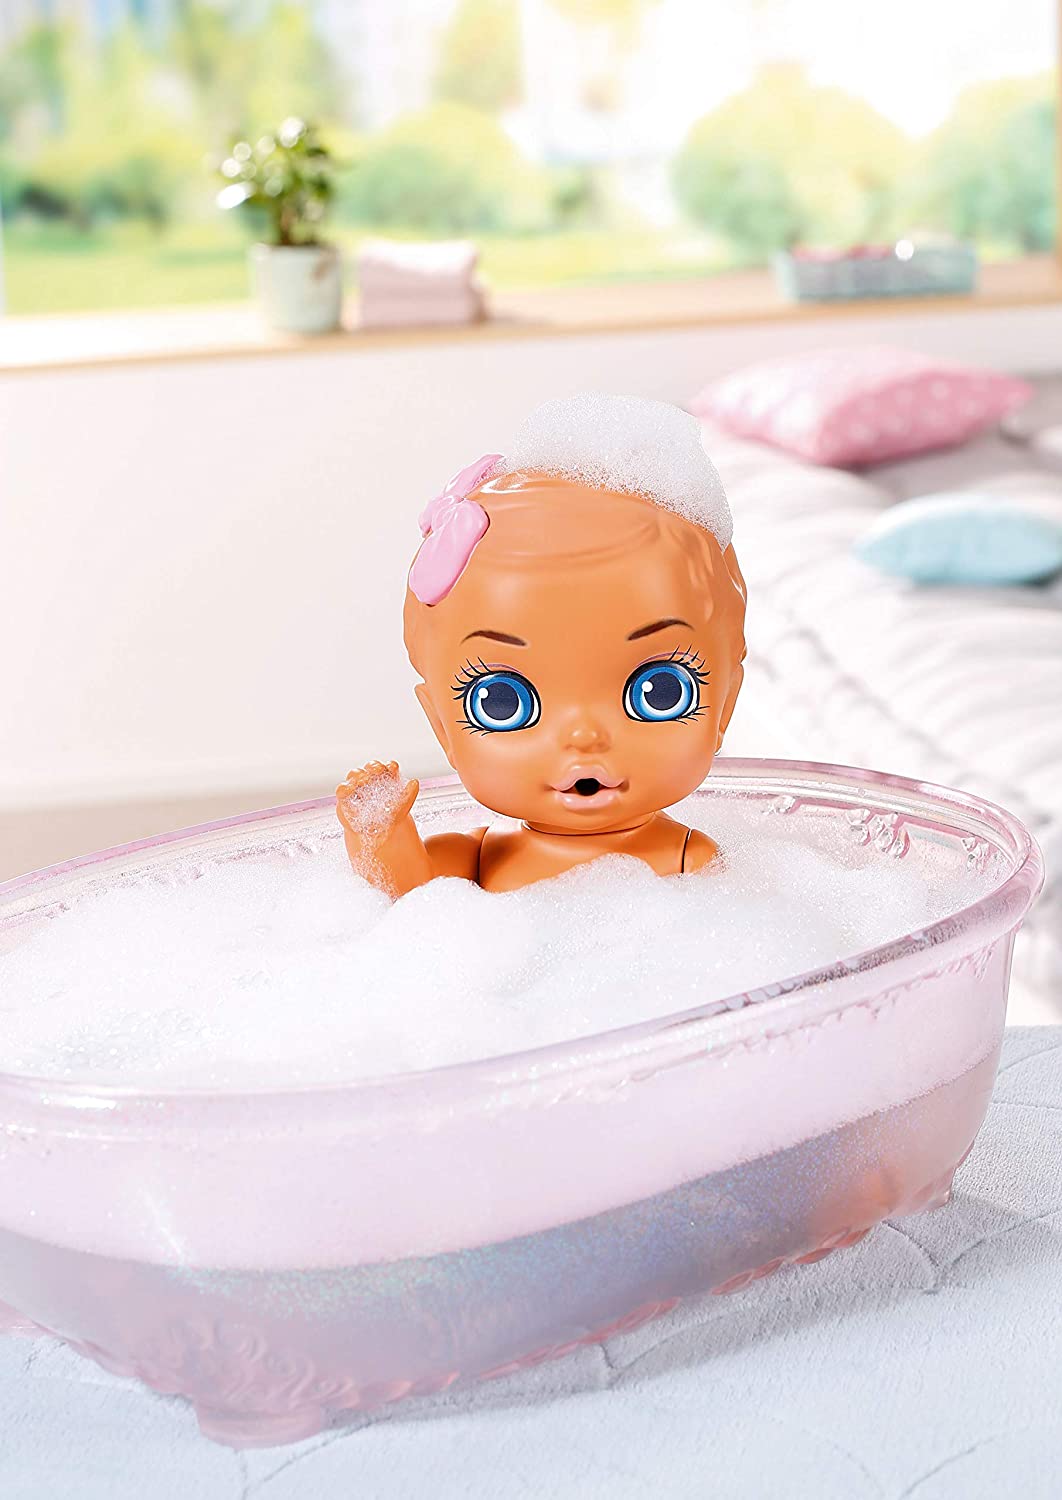 Baby Born Surprise Doll & Bathtub